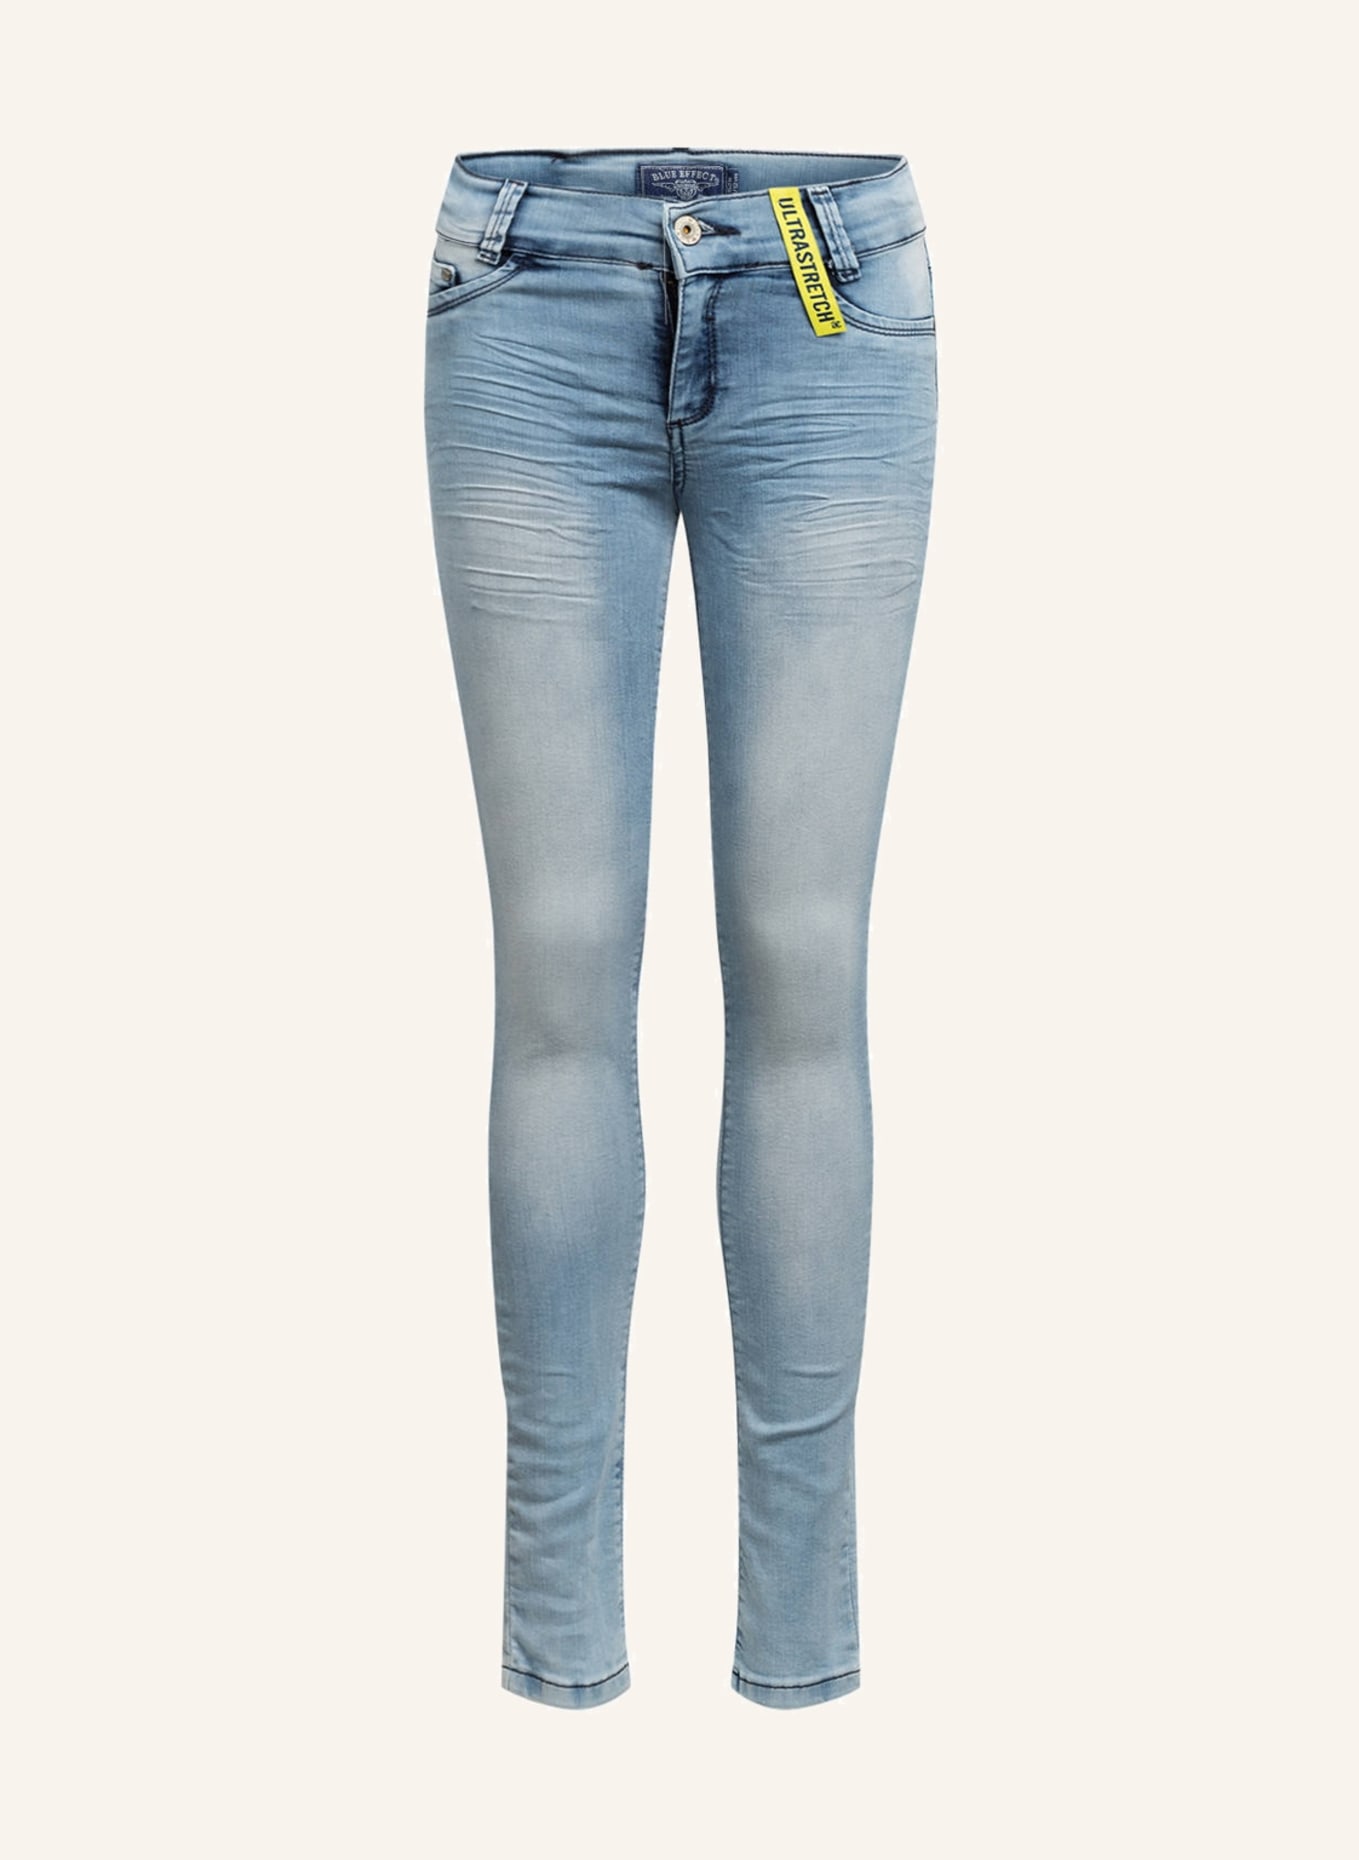 BLUE EFFECT Jeans Super Skinny Fit, Farbe: 9930 Blue denim light (Bild 1)